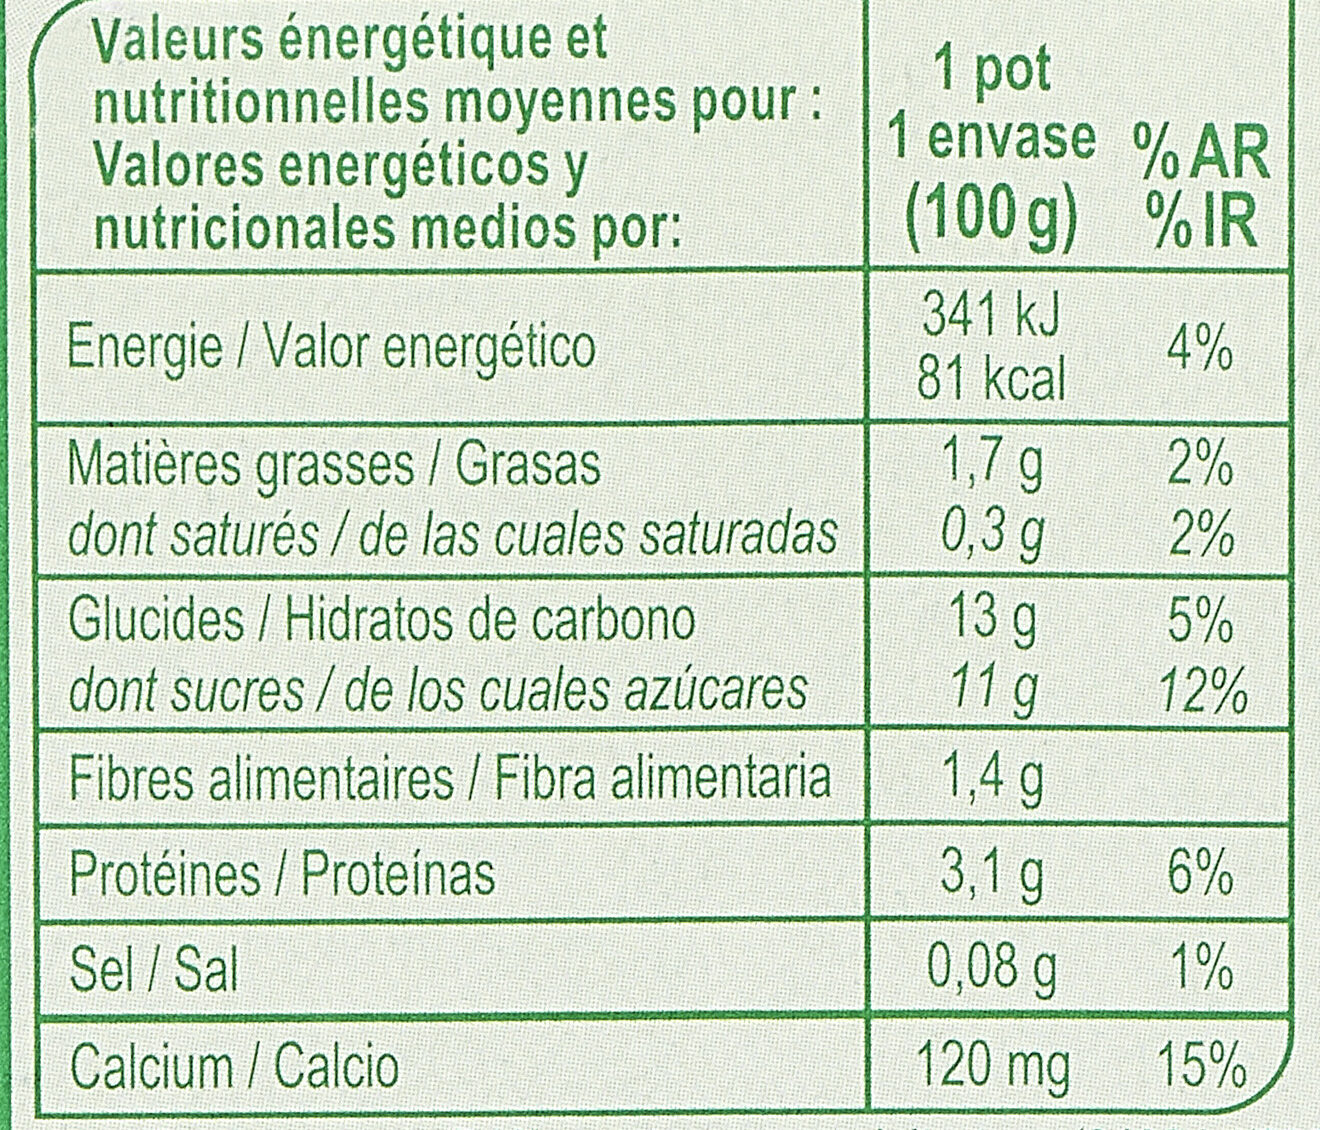 Soja fruits rouges - Informació nutricional - fr